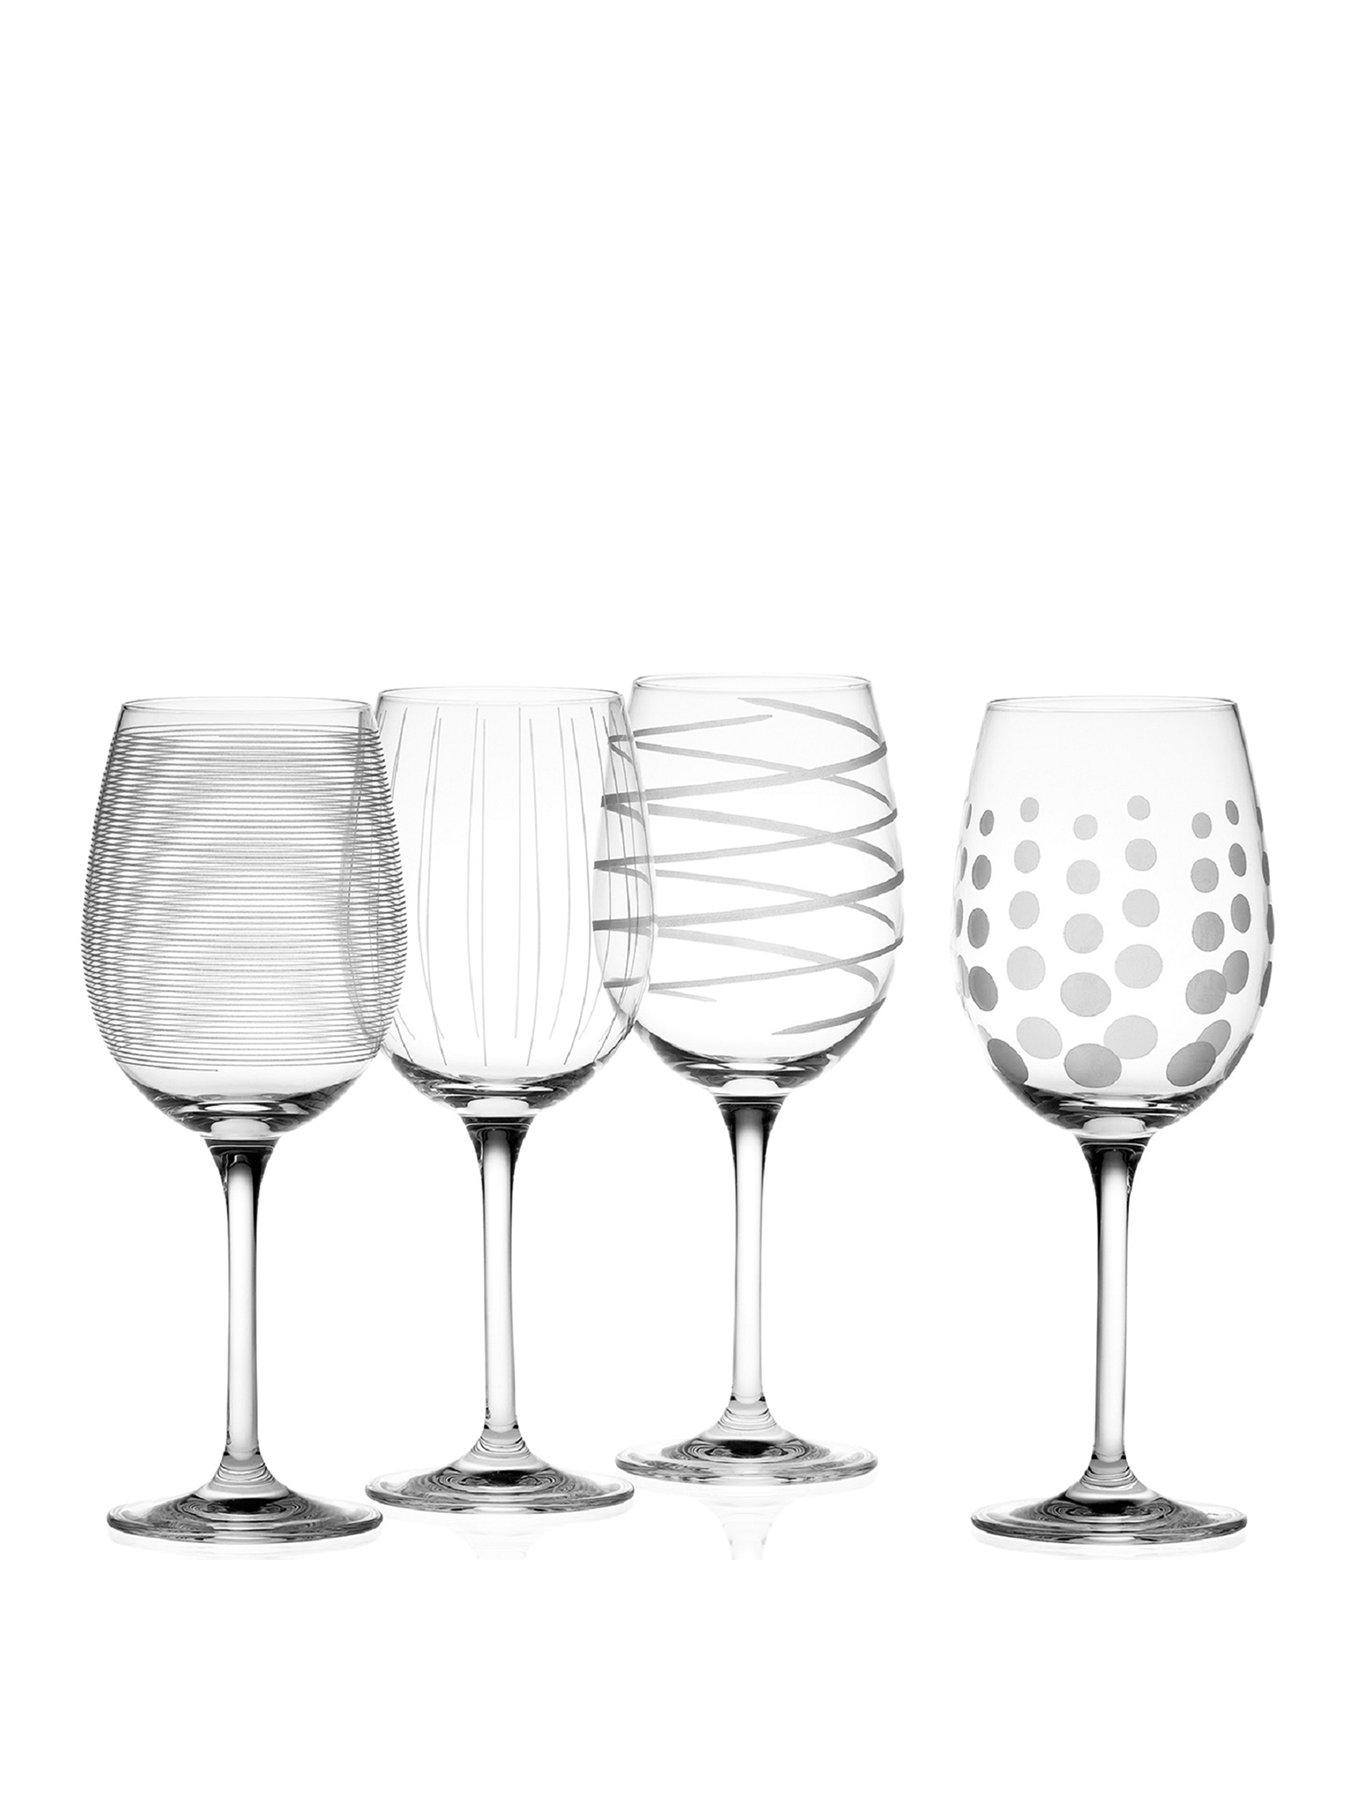 https://media.very.ie/i/littlewoodsireland/Q7FYT_SQ1_0000000647_CLEAR_SLf/maxwell-williams-cheers-white-wine-glasses-ndash-set-of-4.jpg?$180x240_retinamobilex2$&$roundel_lwireland$&p1_img=vsp_pink